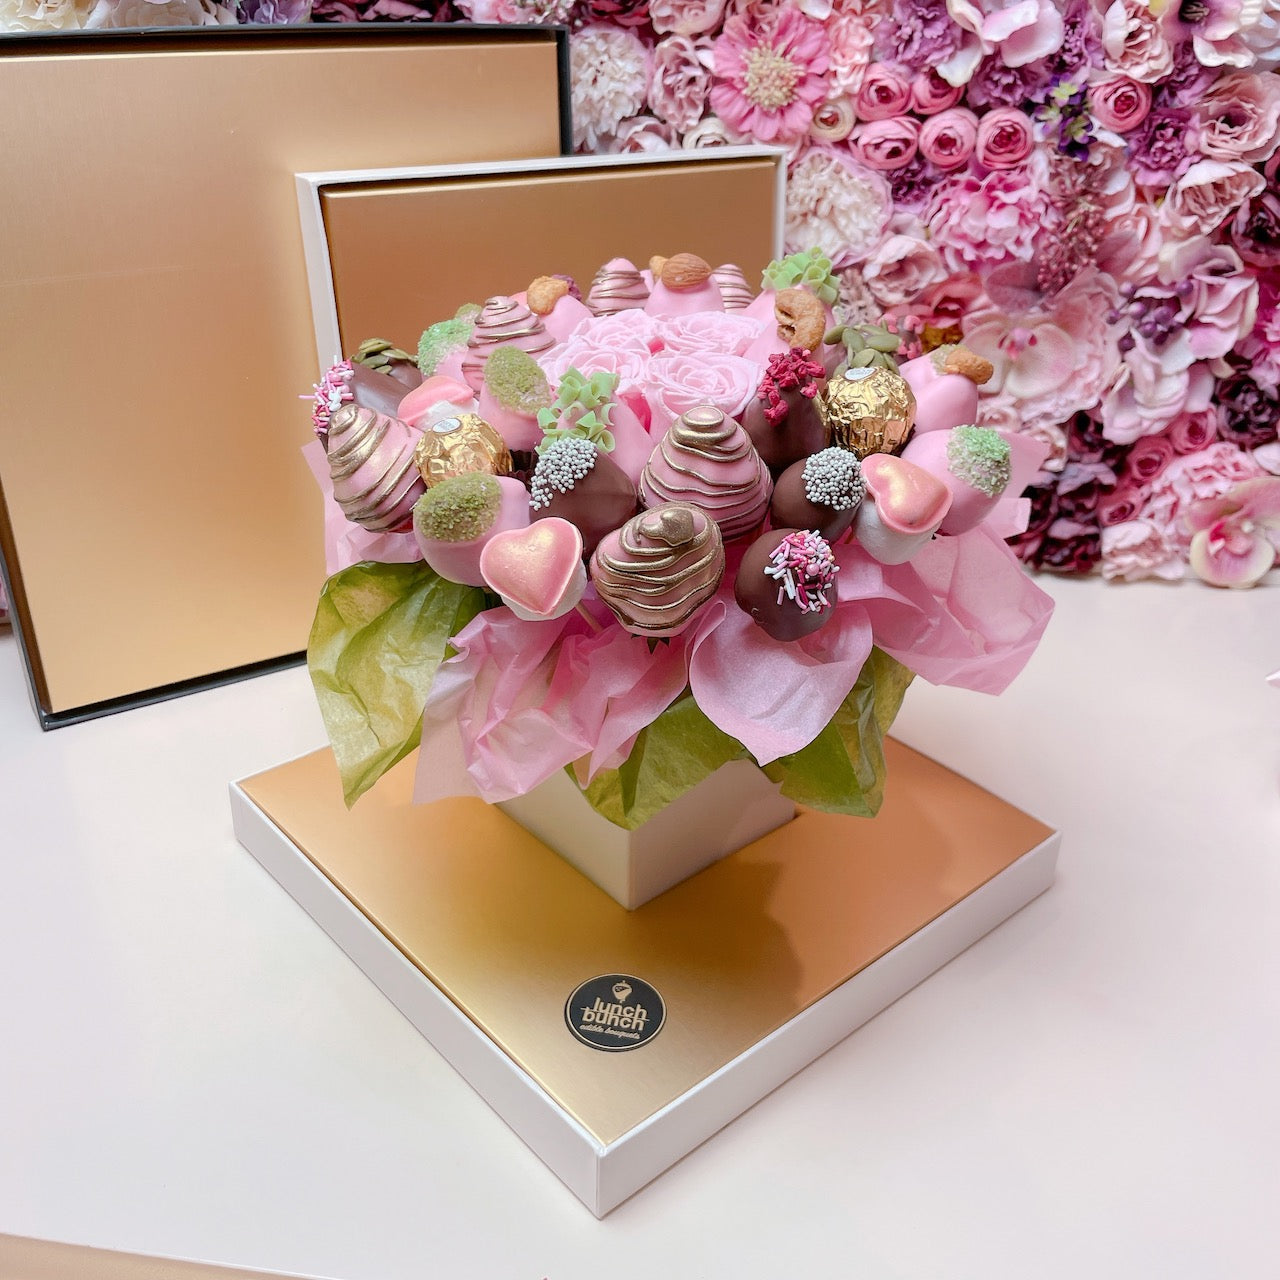 luxury edible bouquet, luxury flowers, chocolate strawberries, chocolate rose, chocolate rose bouquet, luxury gift baskets, luxury gift ideas,